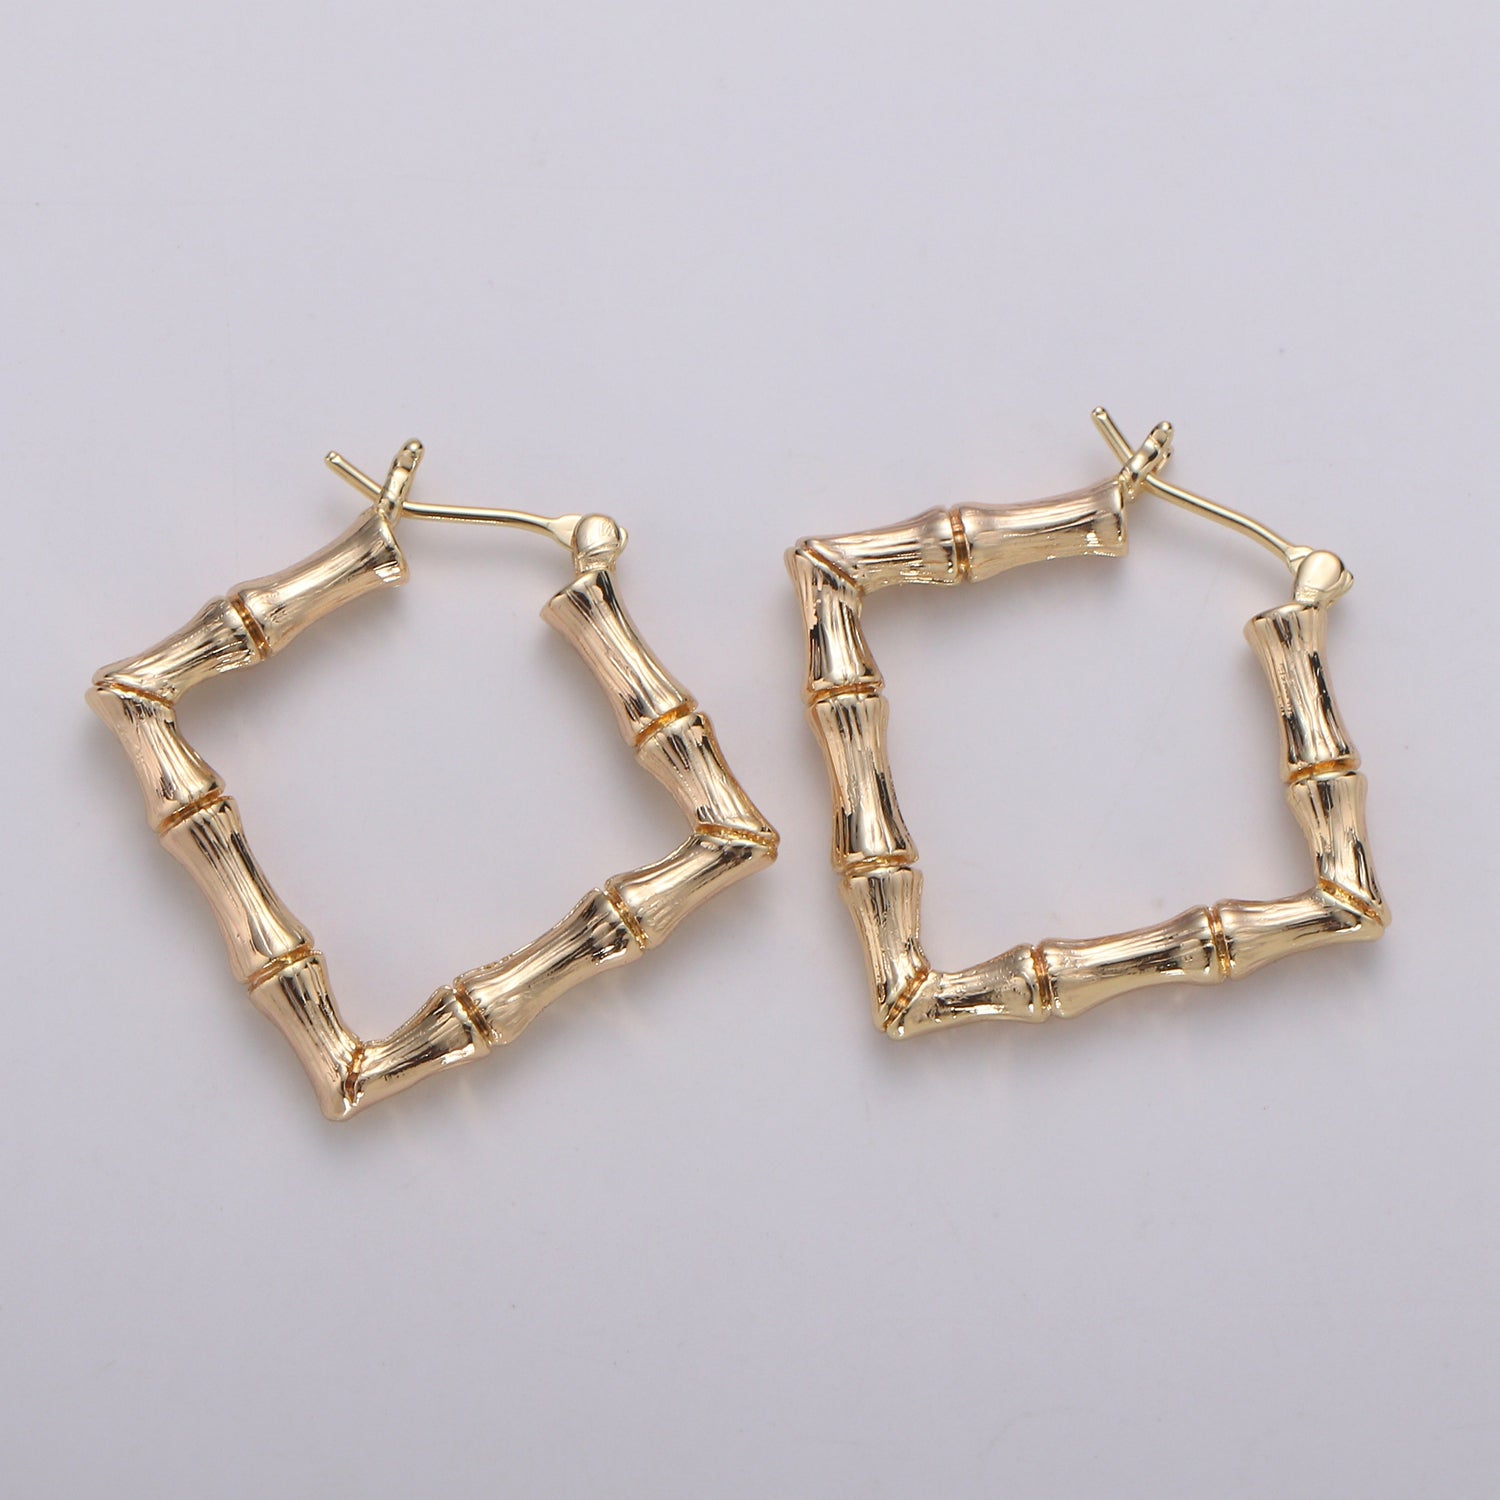 1 pair Square Hoop Earrings, 18k Gold Filled Hoop Earrings, Gold Bamboo Earrings, Statement Necklace Everyday Wear Earring for her - DLUXCA